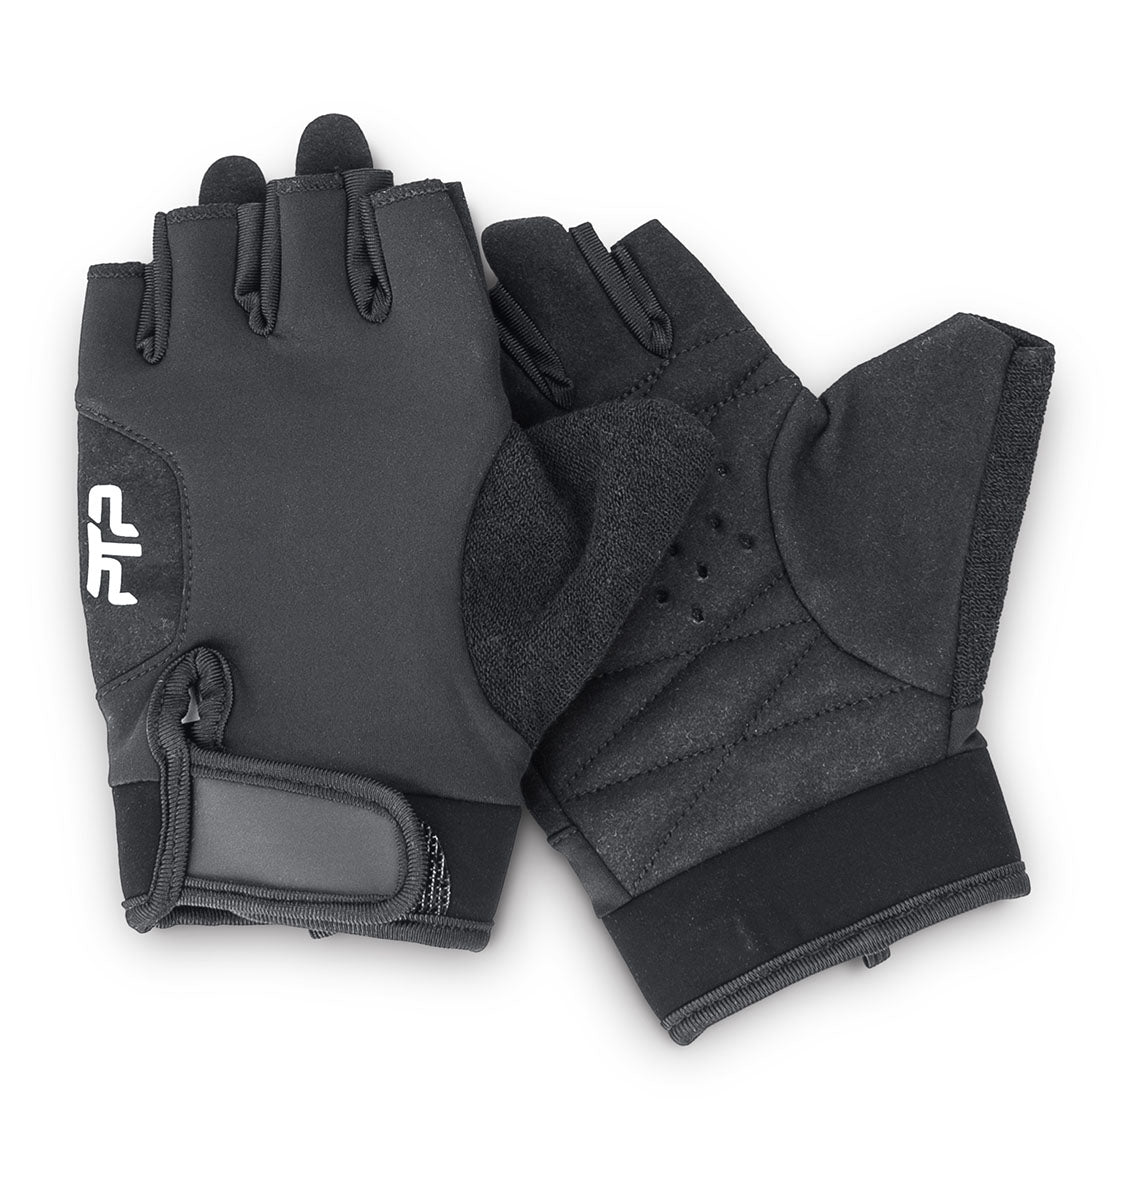 PTP Lightweight Training Gloves - Black - 1